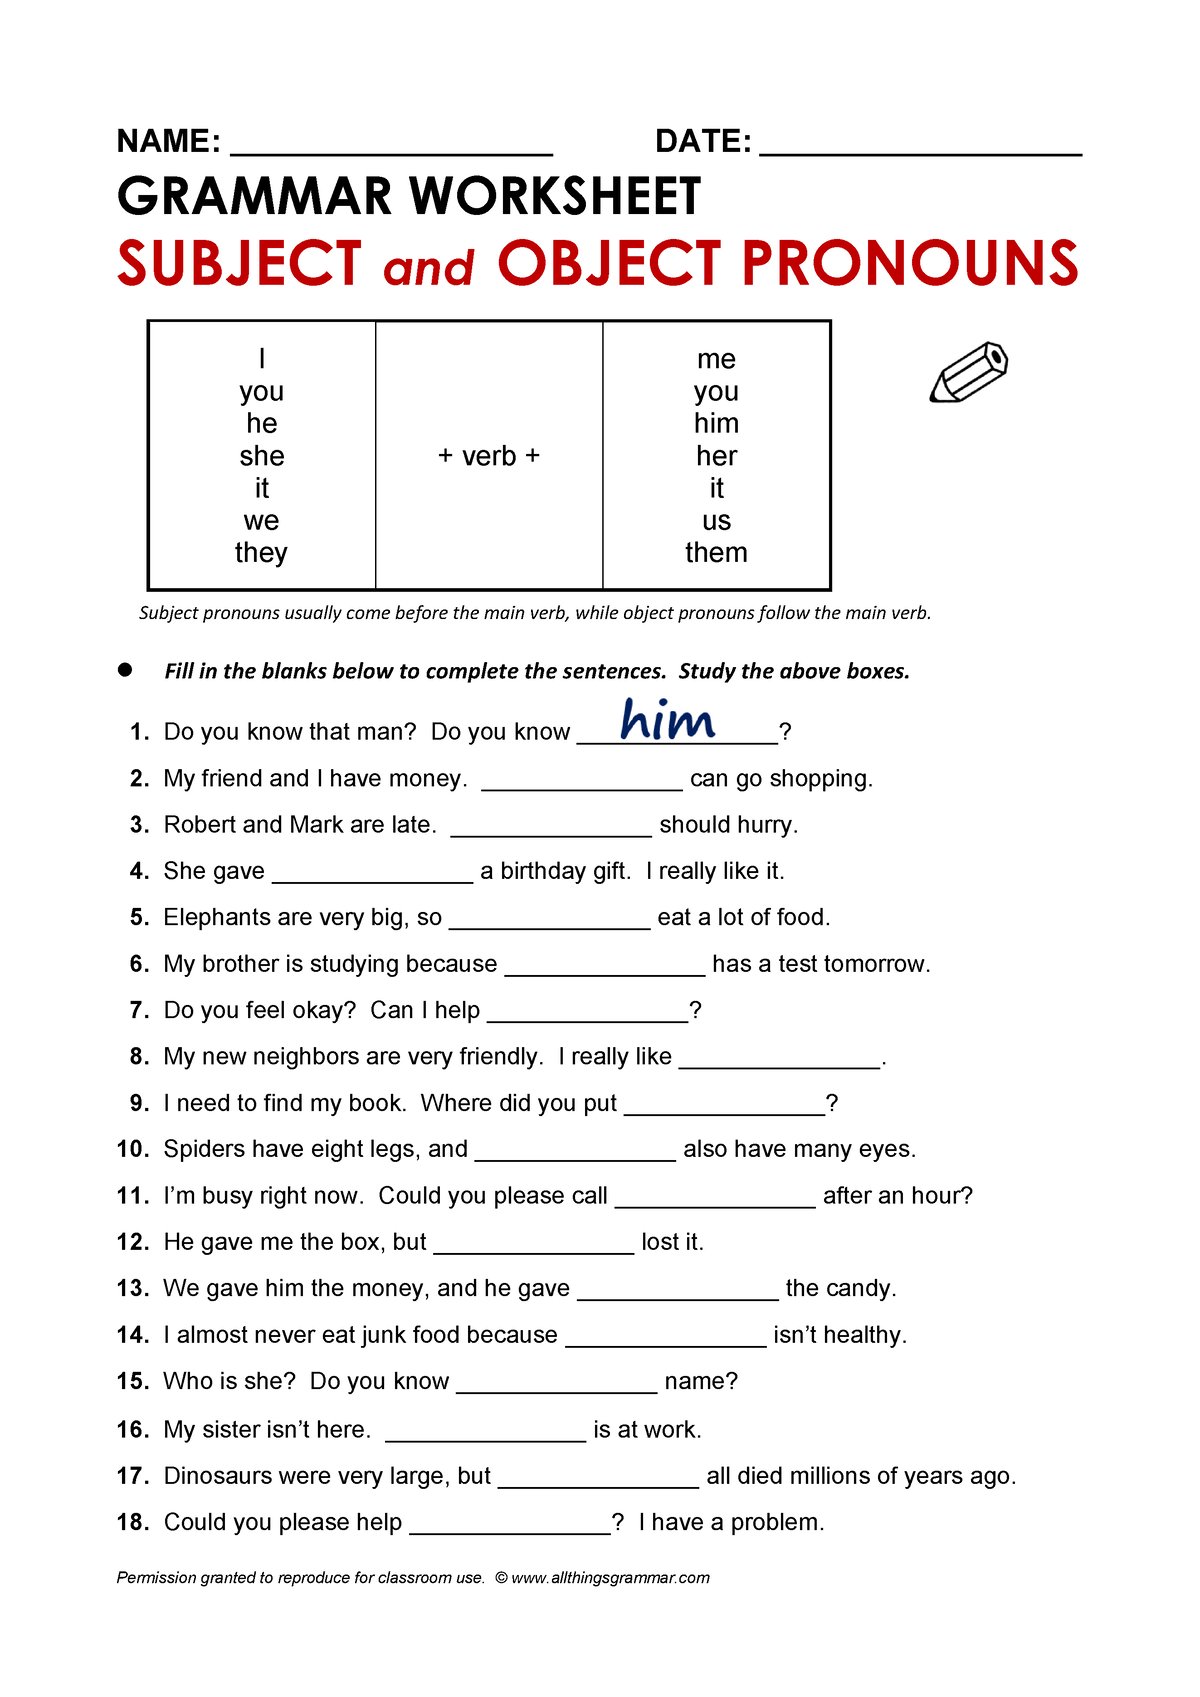 object-pronouns-exercises-name-date